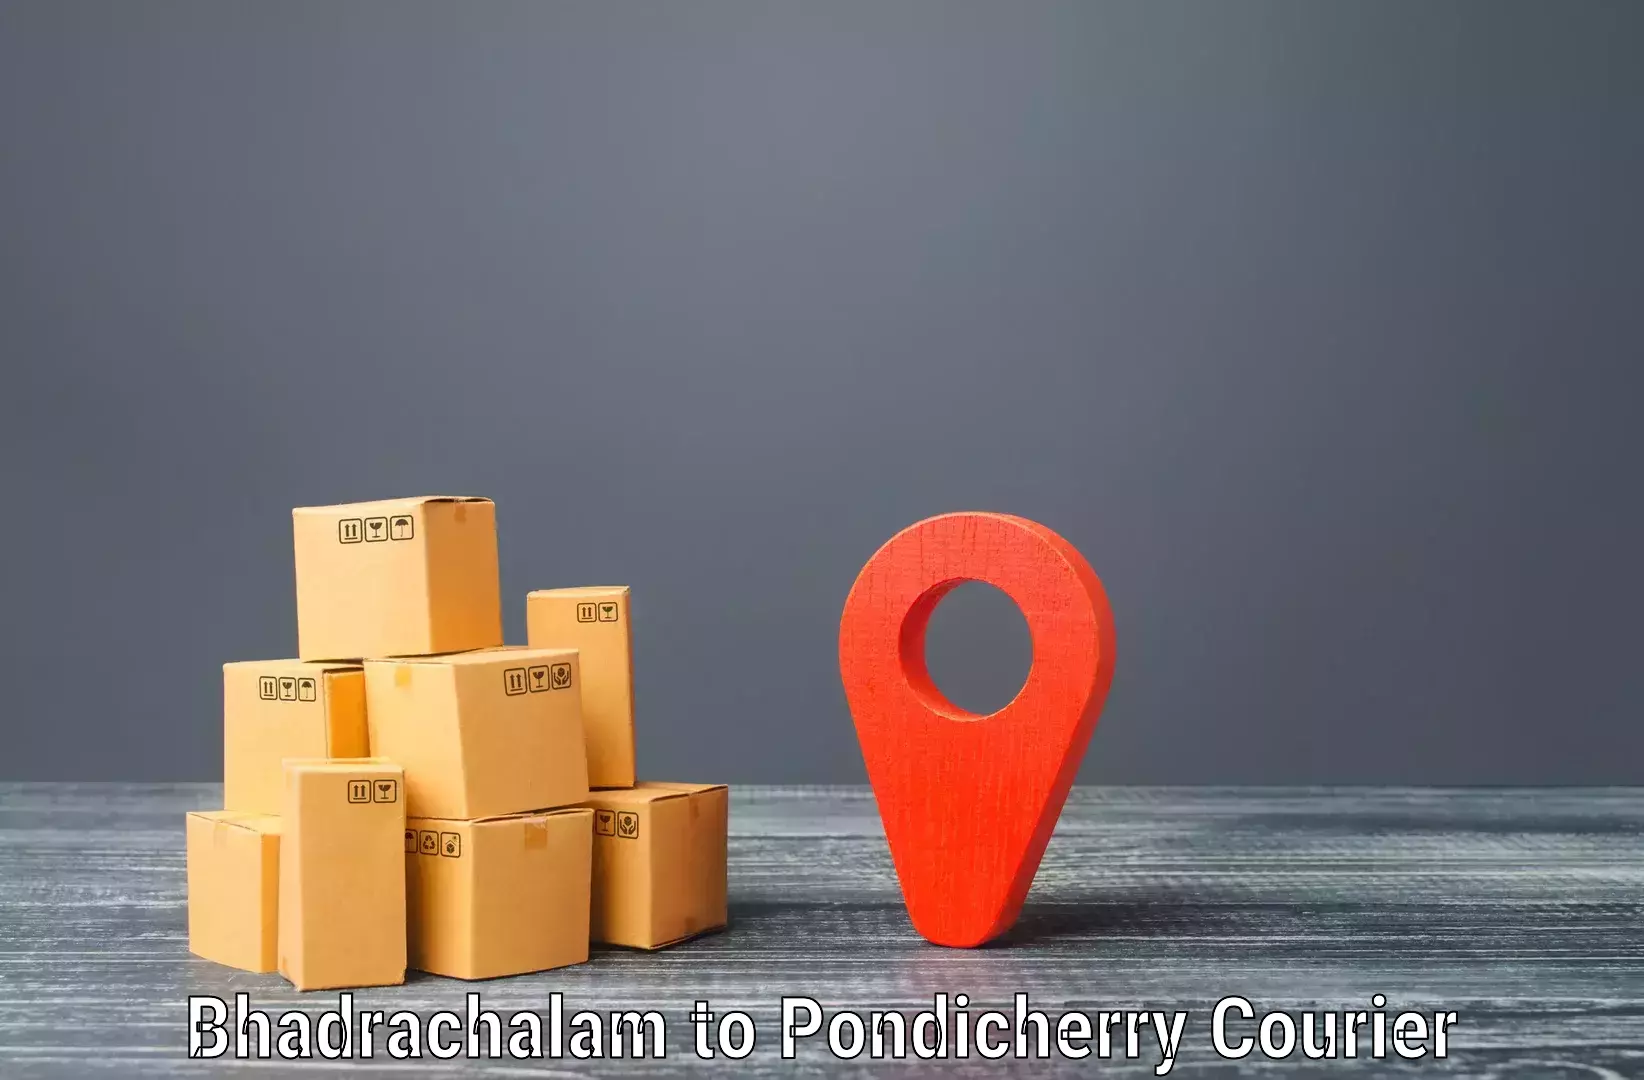 Express postal services in Bhadrachalam to Pondicherry